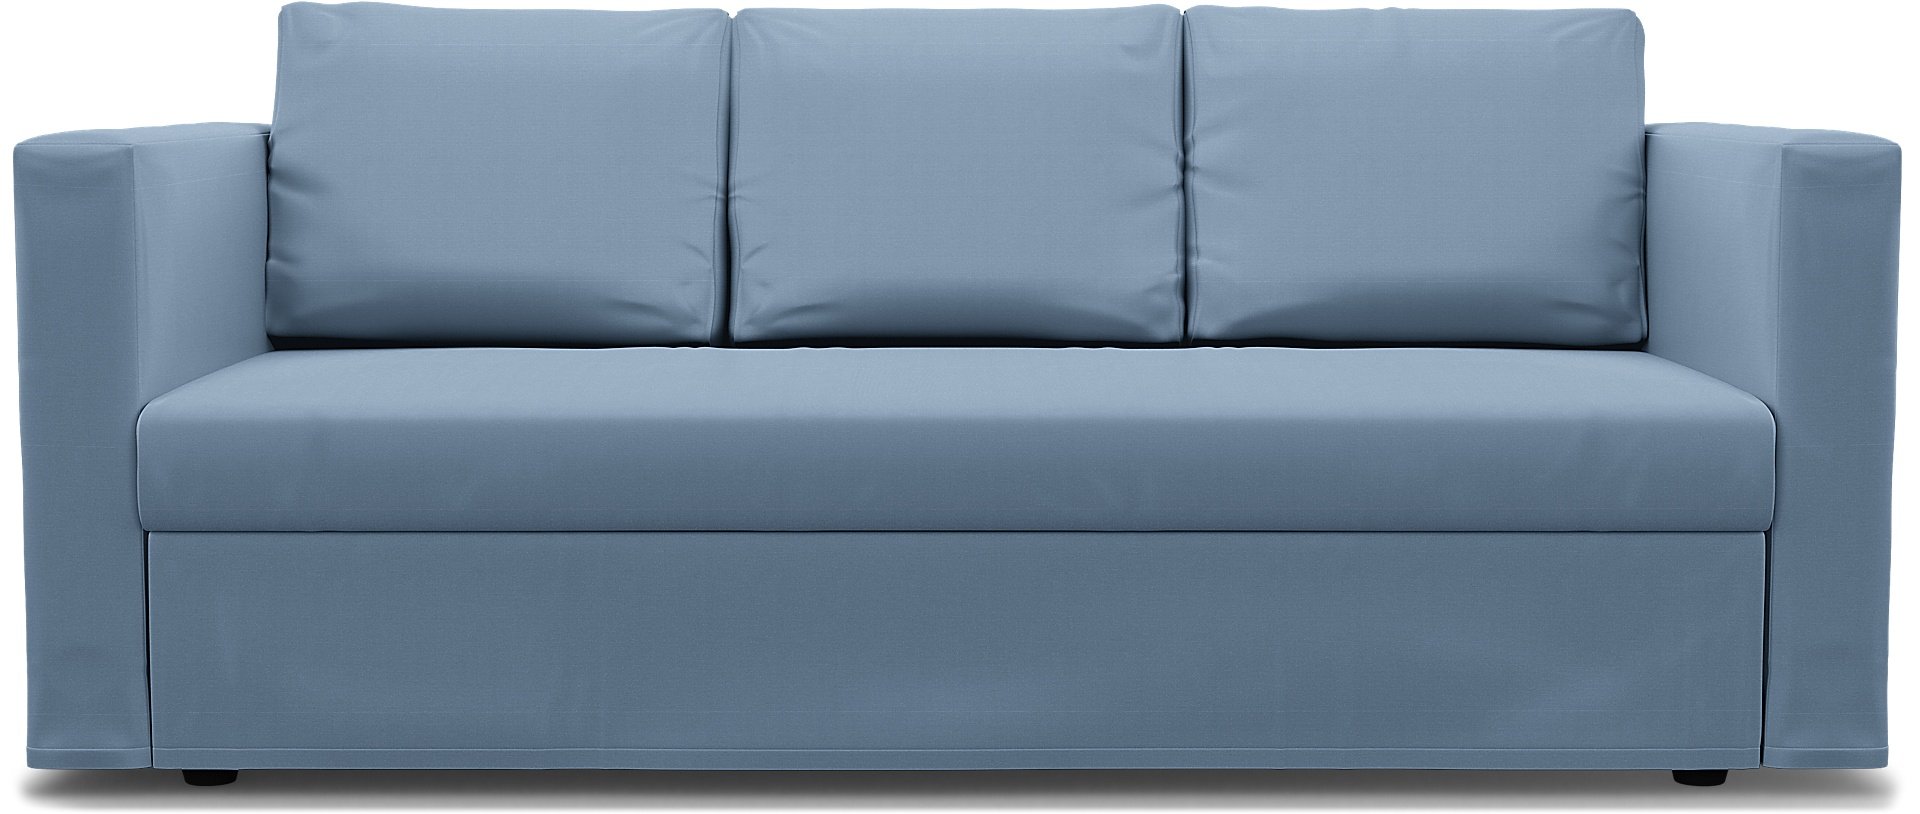 IKEA - Friheten 3 Seater Sofa Bed Cover, Dusty Blue, Cotton - Bemz